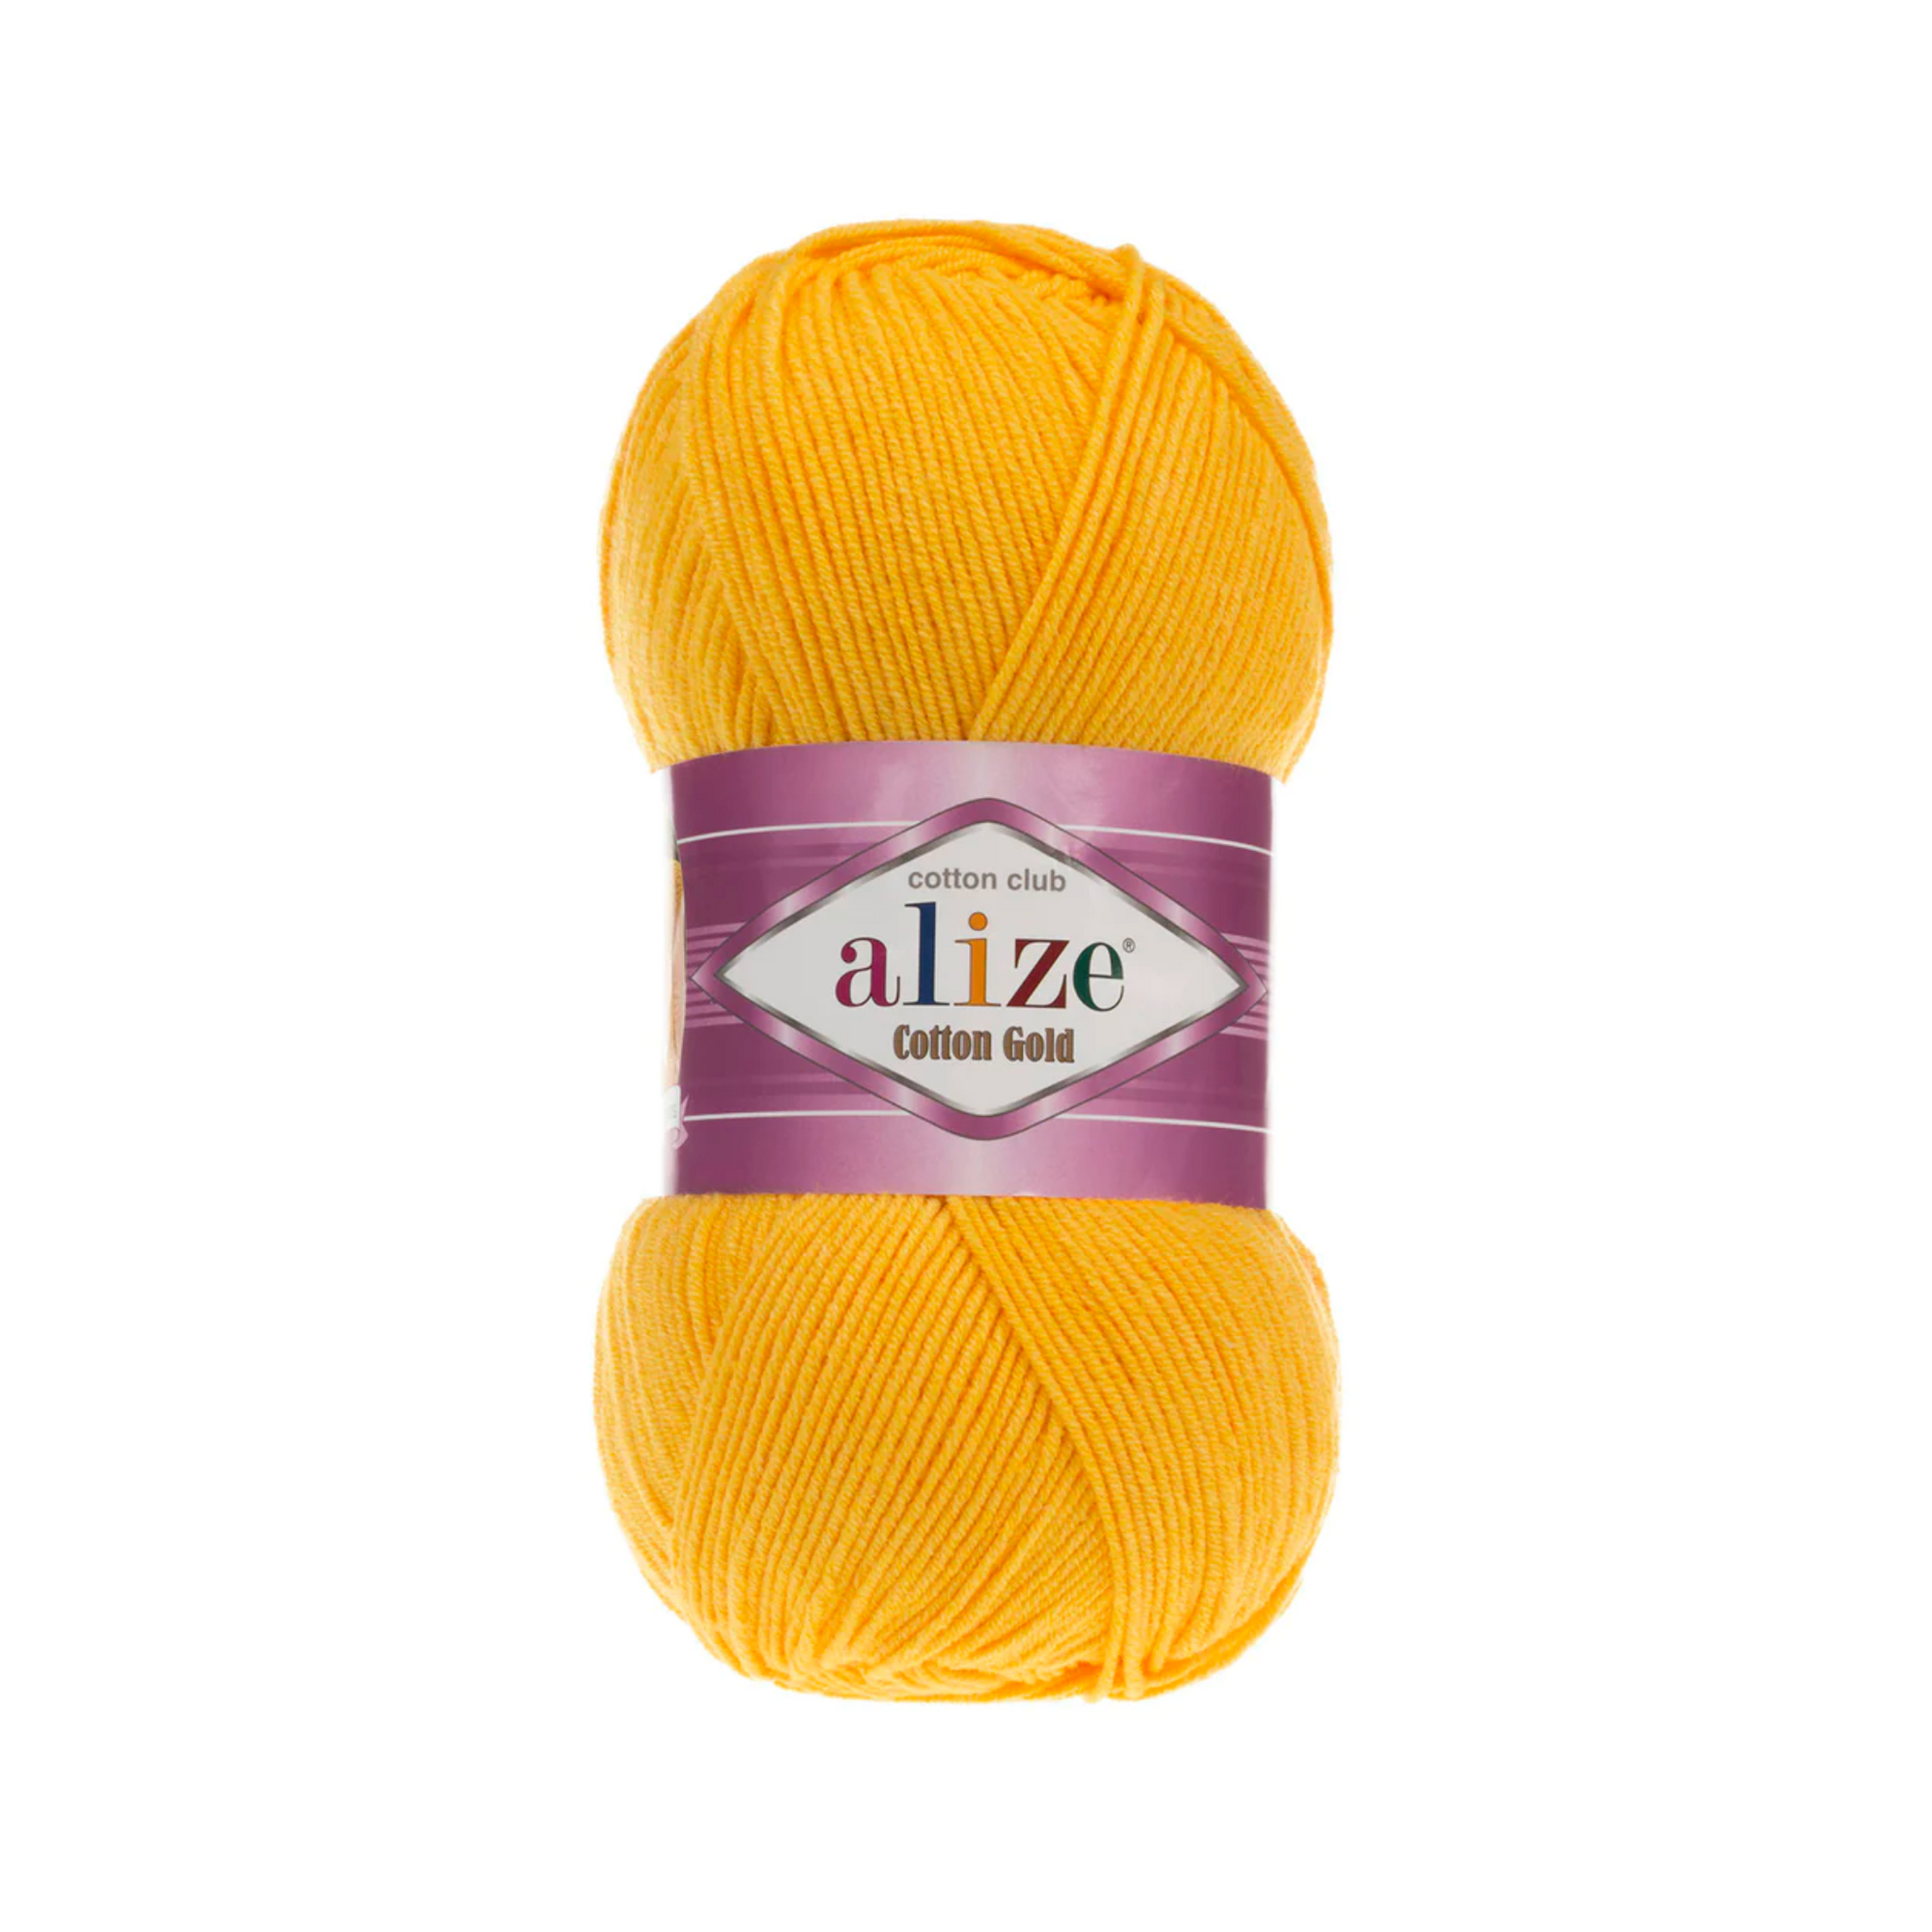 Alize Cotton Gold Knitting Yarn, Lilac - 43